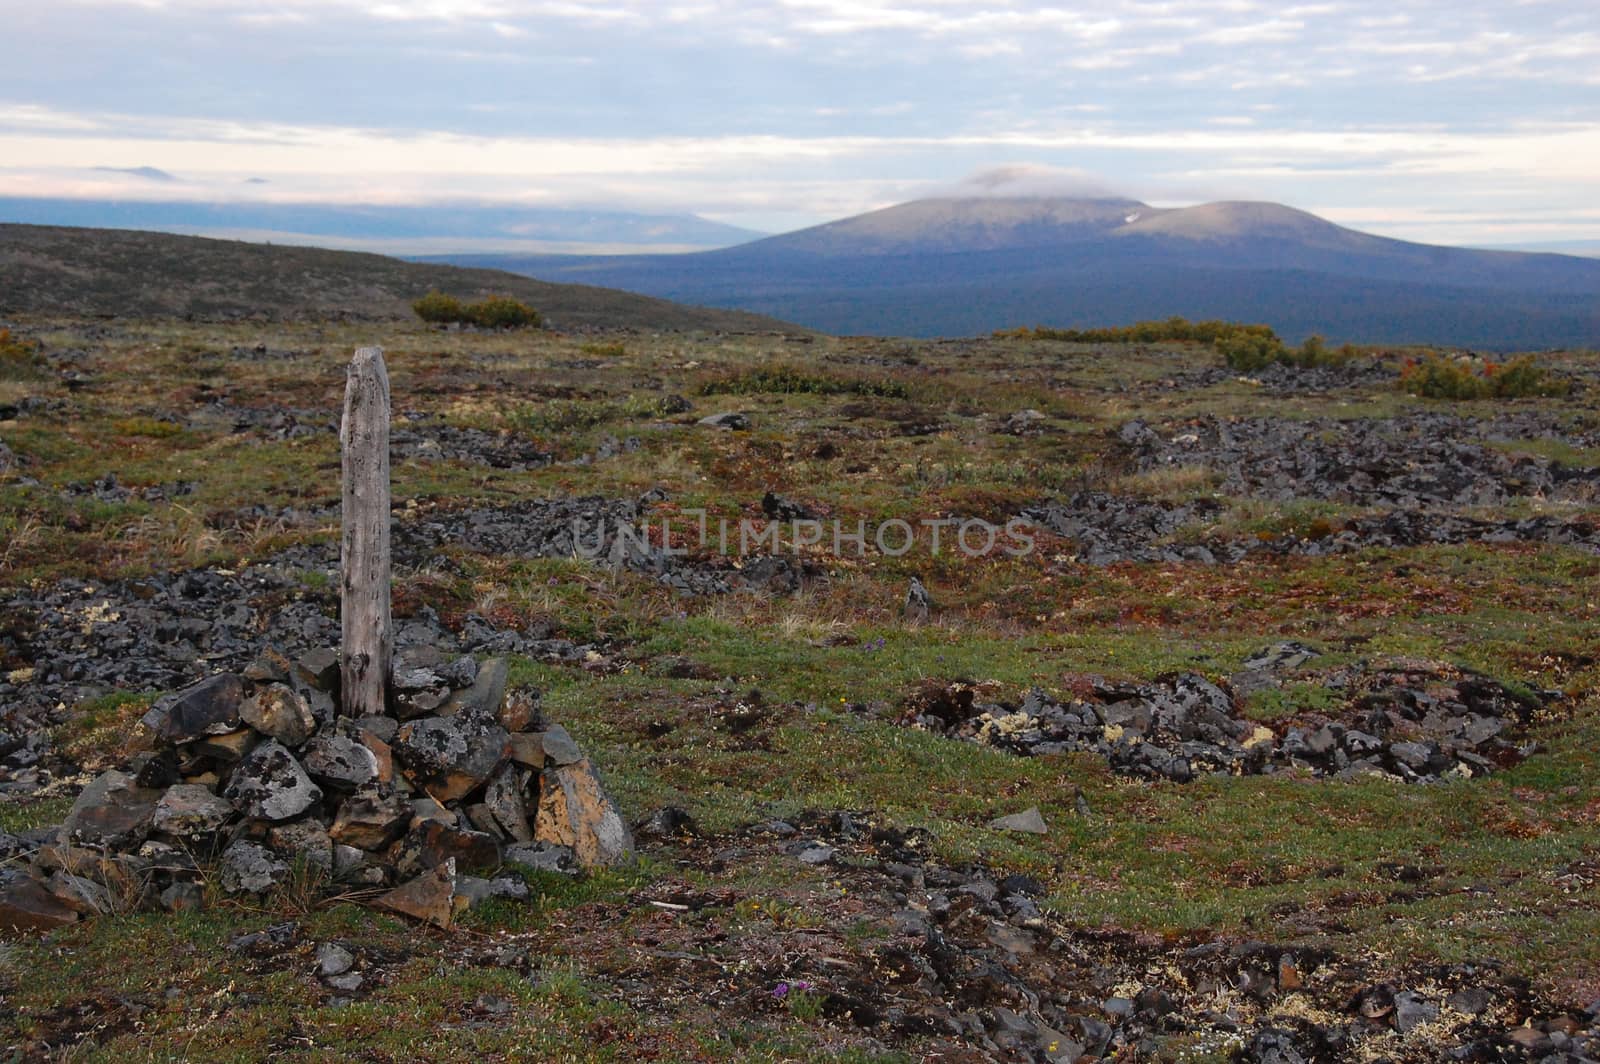 Ancient grave at top of mountain at Kolyma region, Chersky, Yakutia region